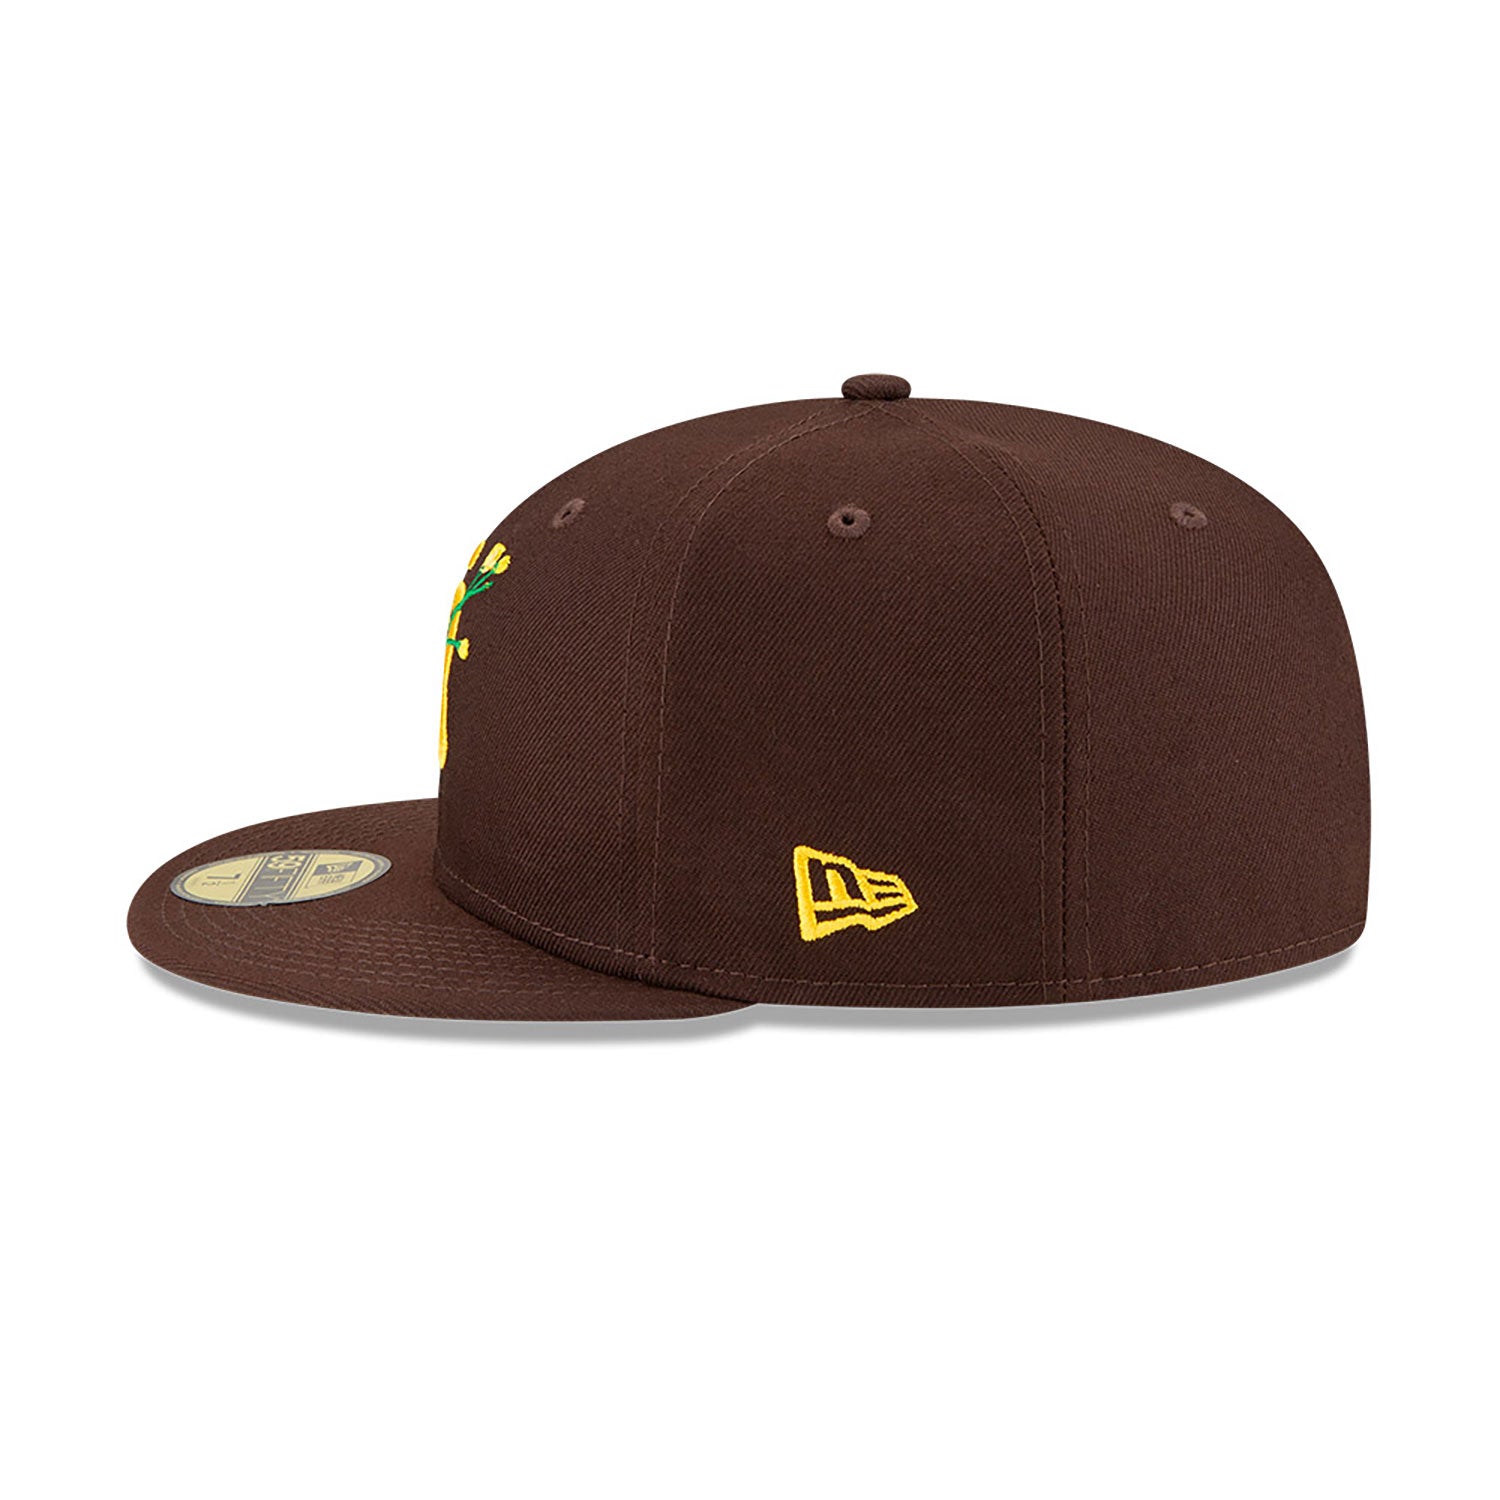 New Era 9FIFTY San Diego Padres Team Script Snapback Hat Burnt Wood Brown Yellow